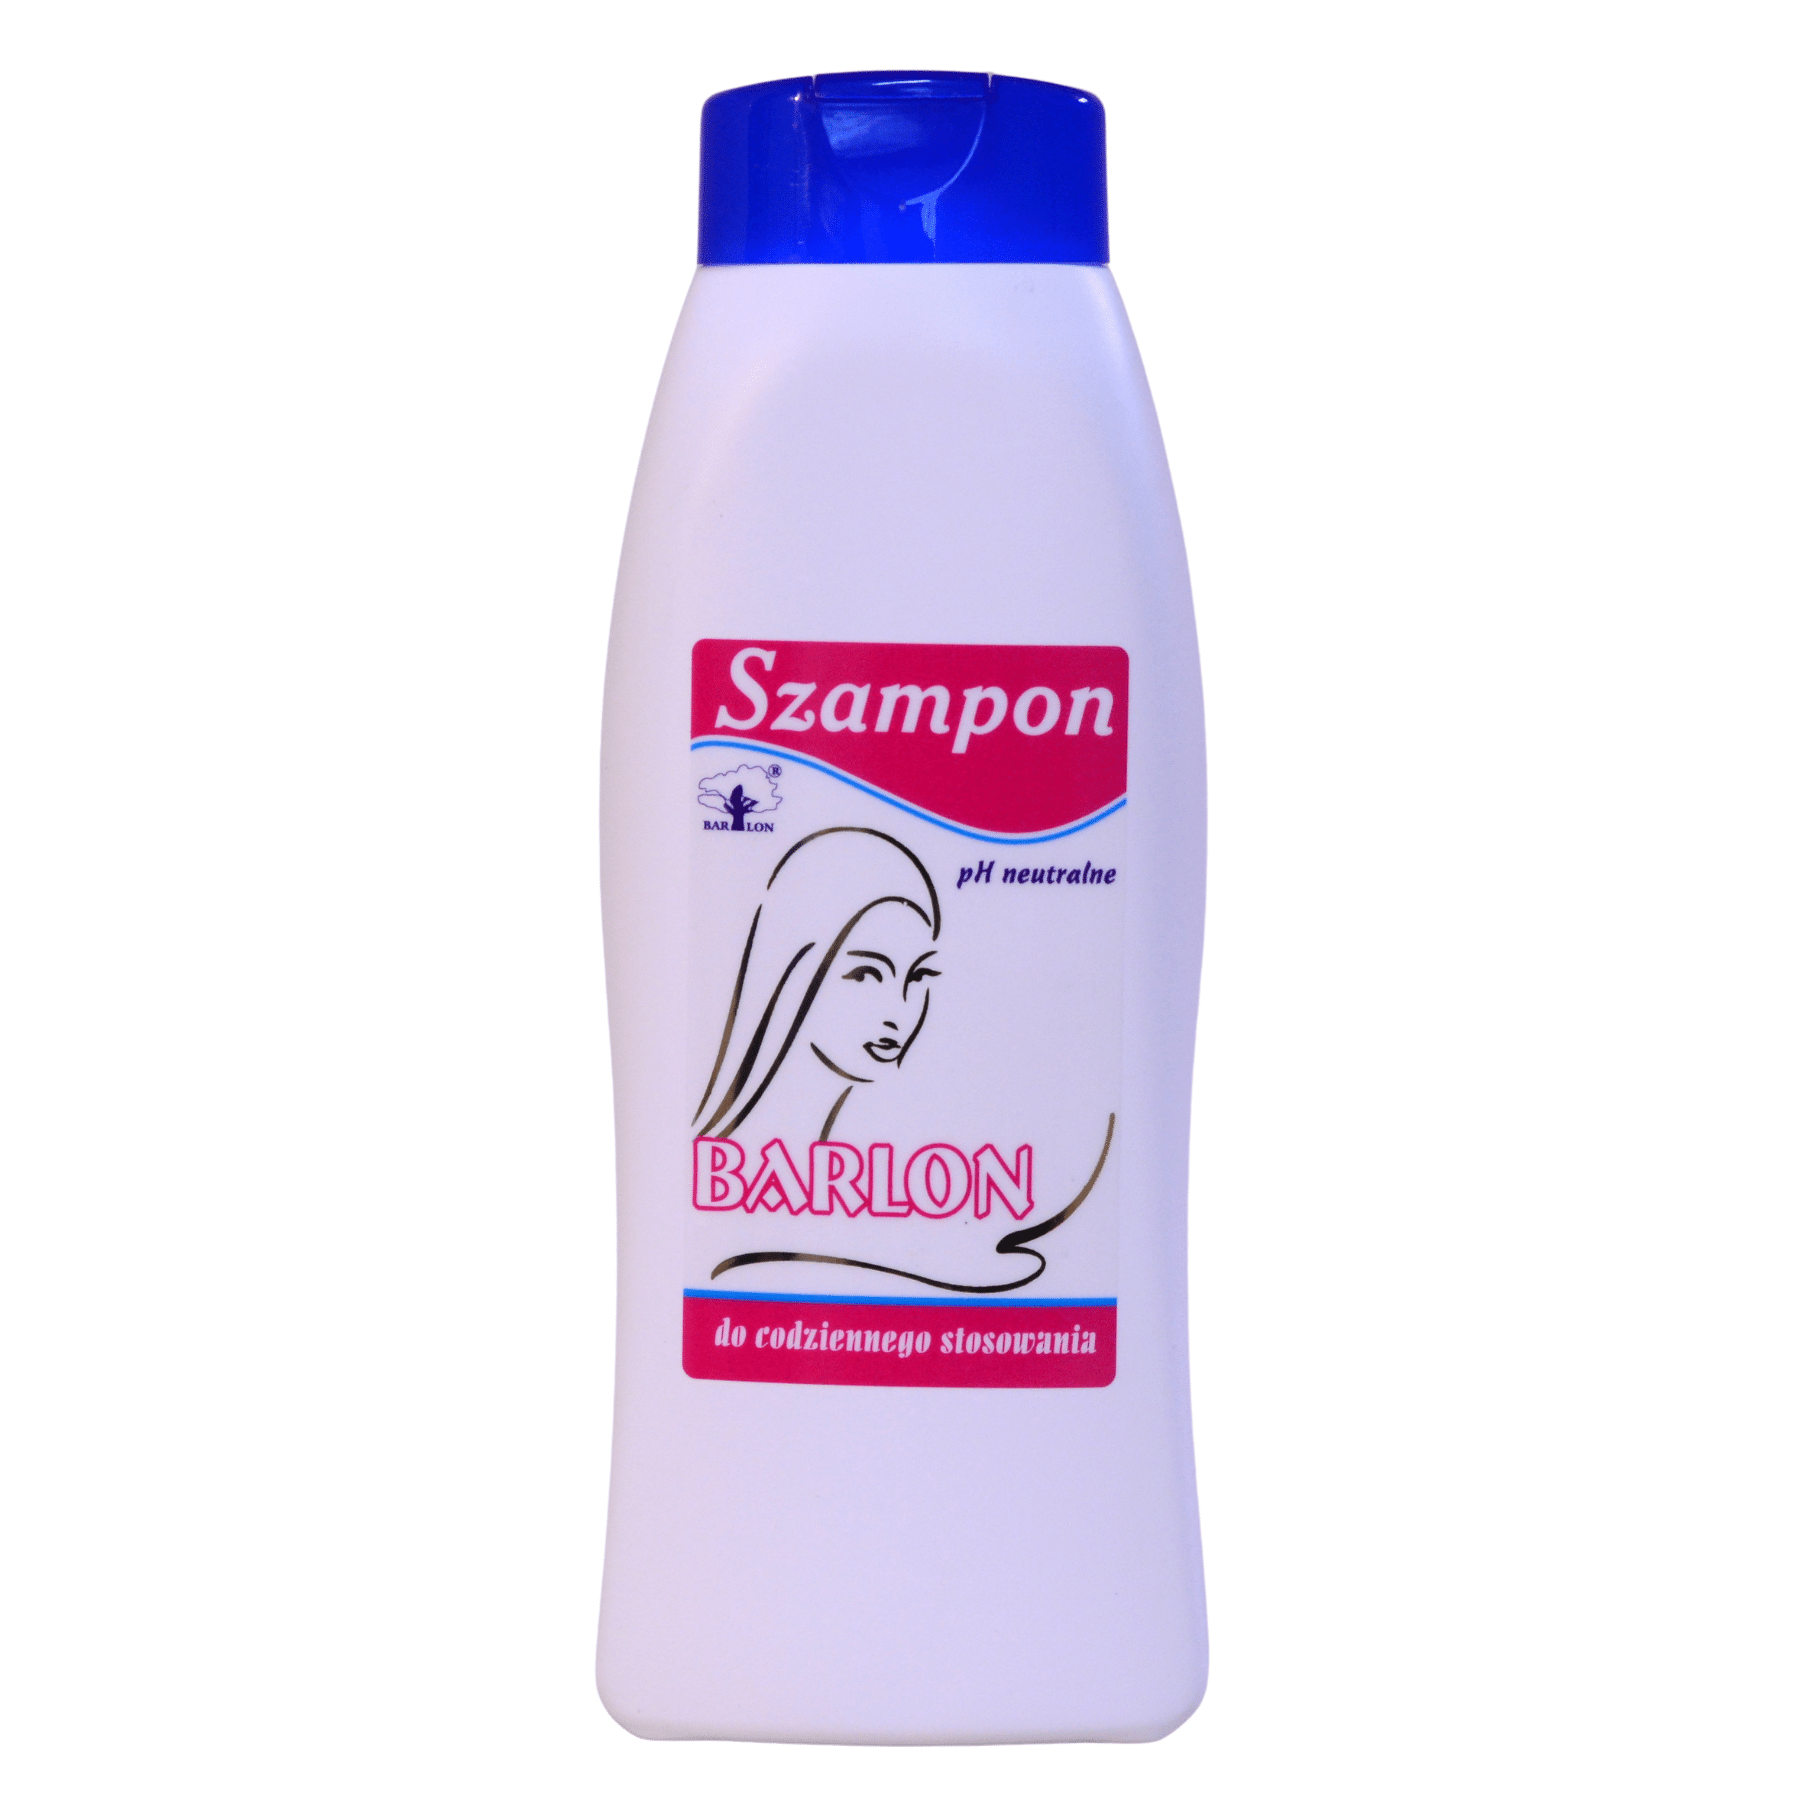 szampon neutralne ph